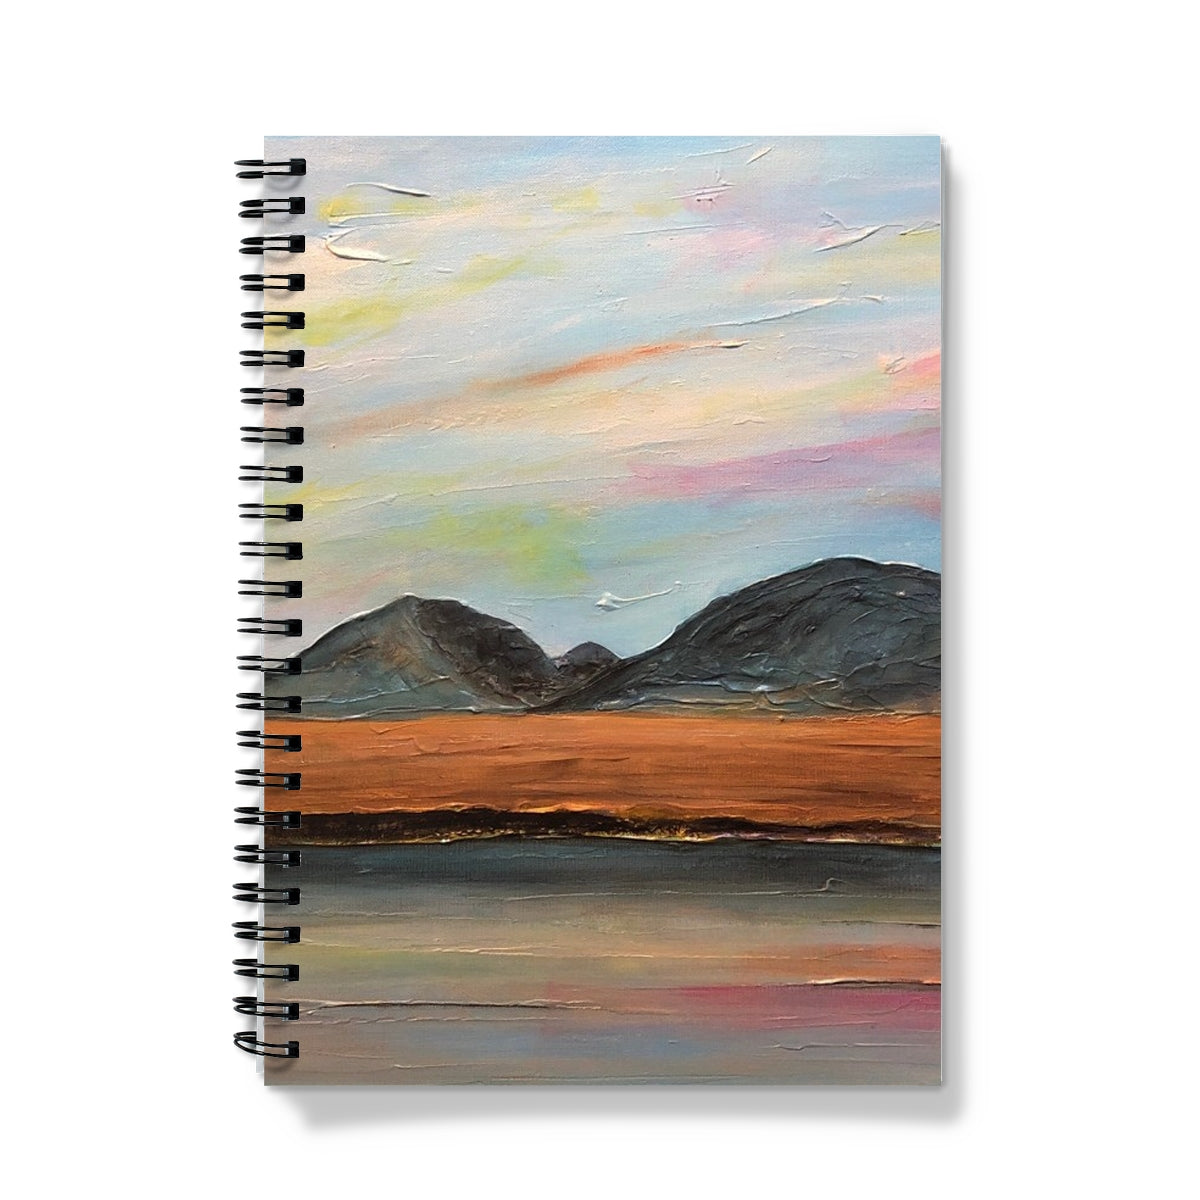 Jura Dawn Art Gifts Notebook-Journals & Notebooks-Hebridean Islands Art Gallery-A5-Lined-Paintings, Prints, Homeware, Art Gifts From Scotland By Scottish Artist Kevin Hunter